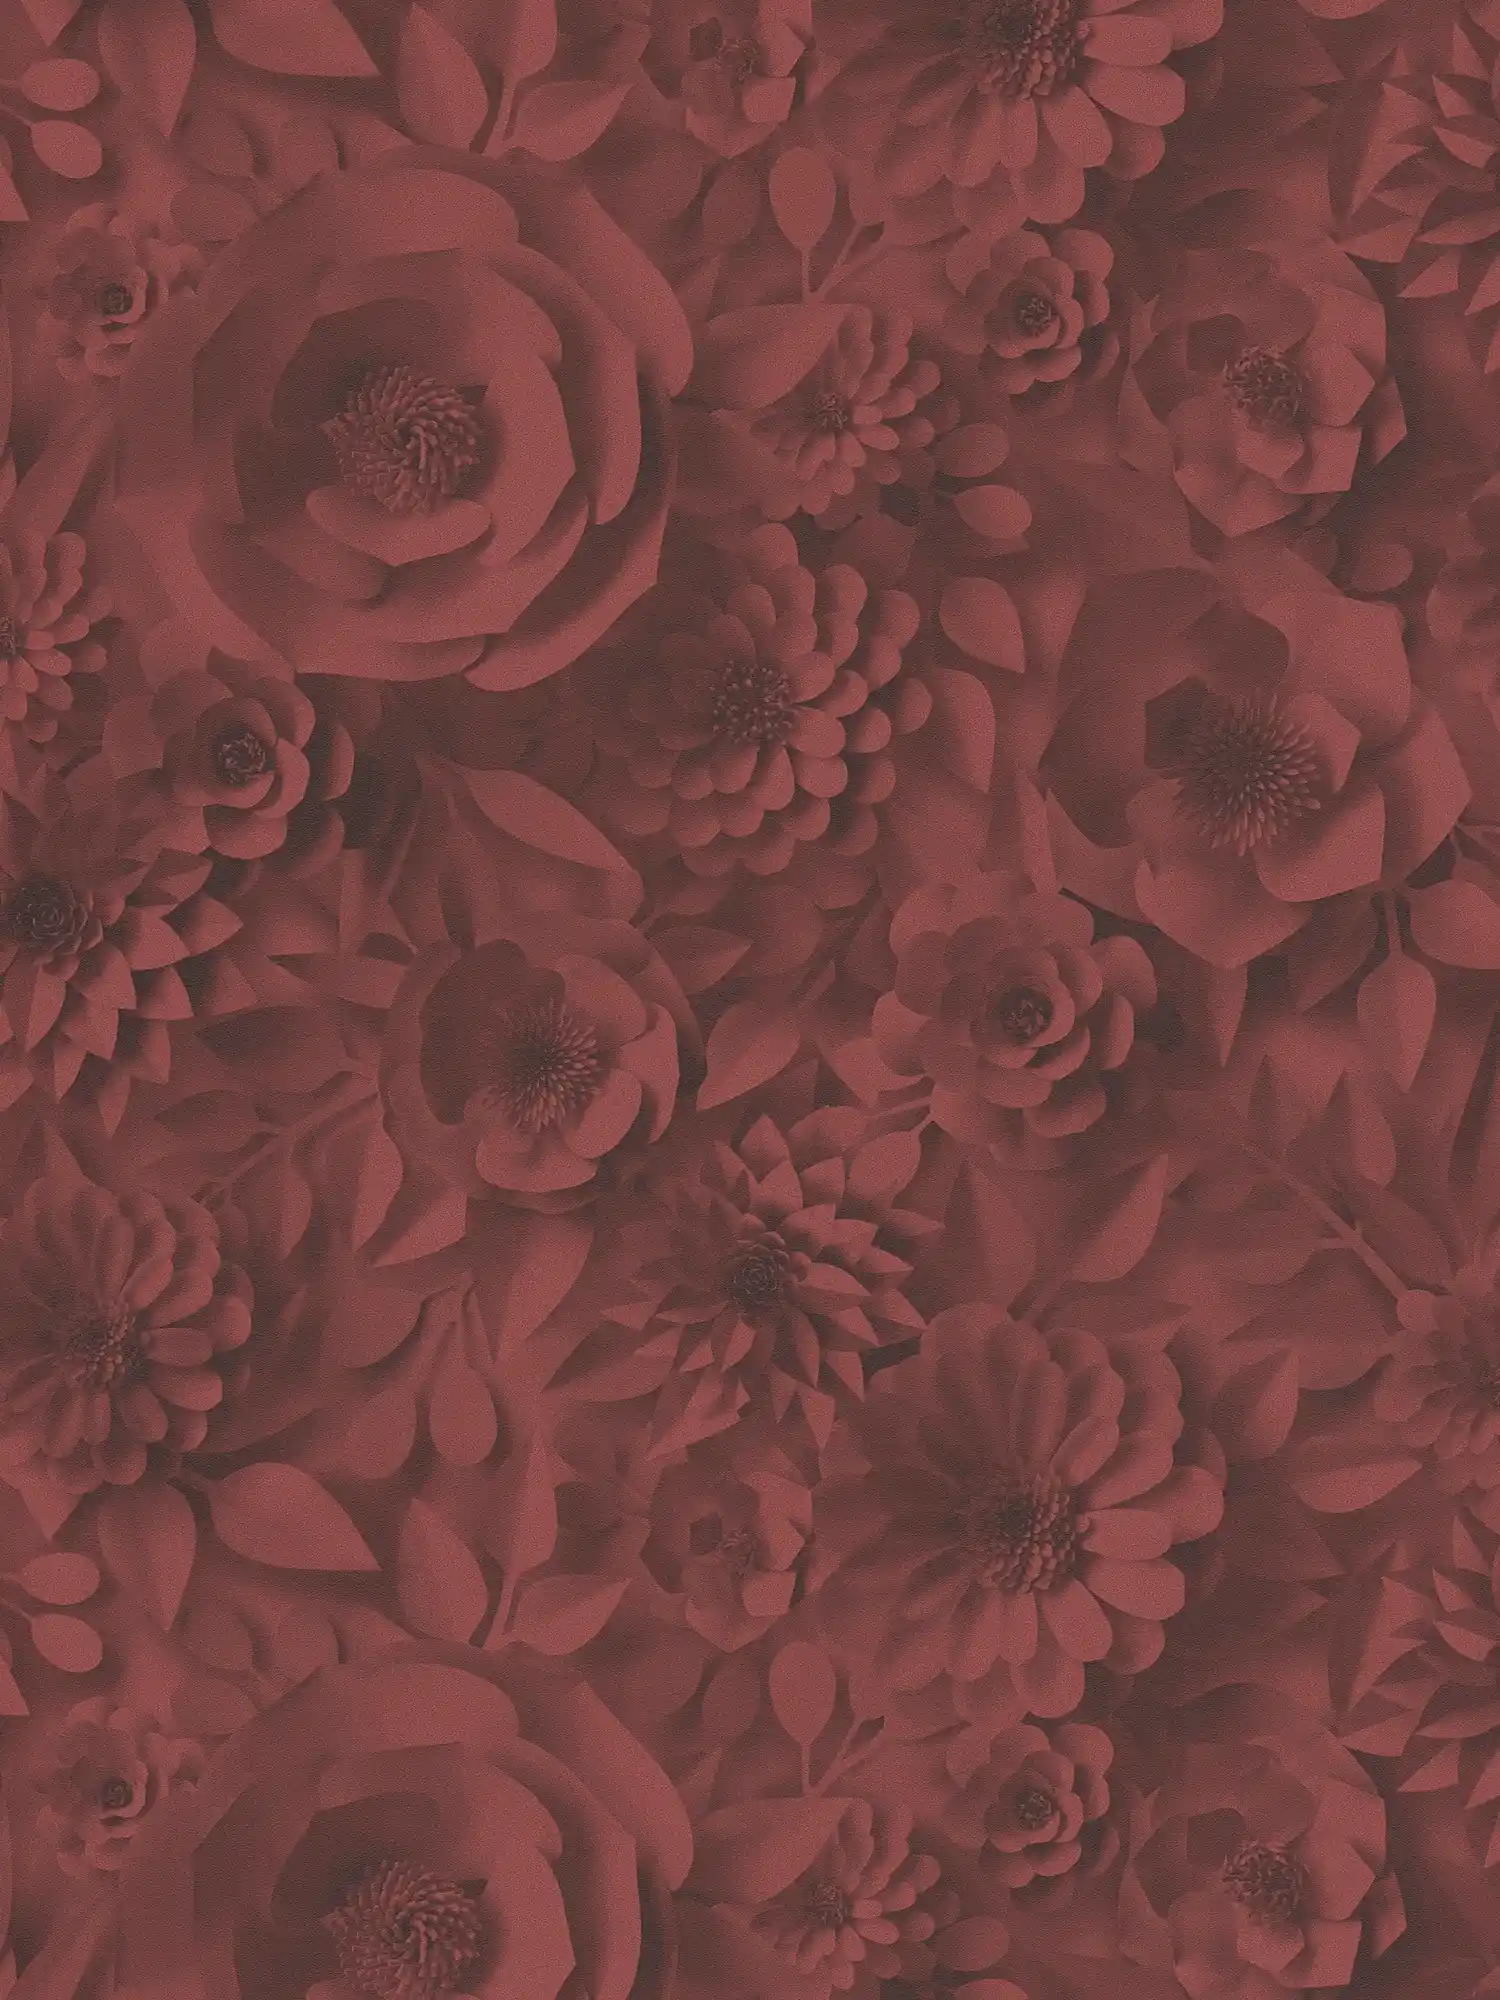         3D Tapete mit Papierblumen, Grafik Blüten-Muster – Rot
    